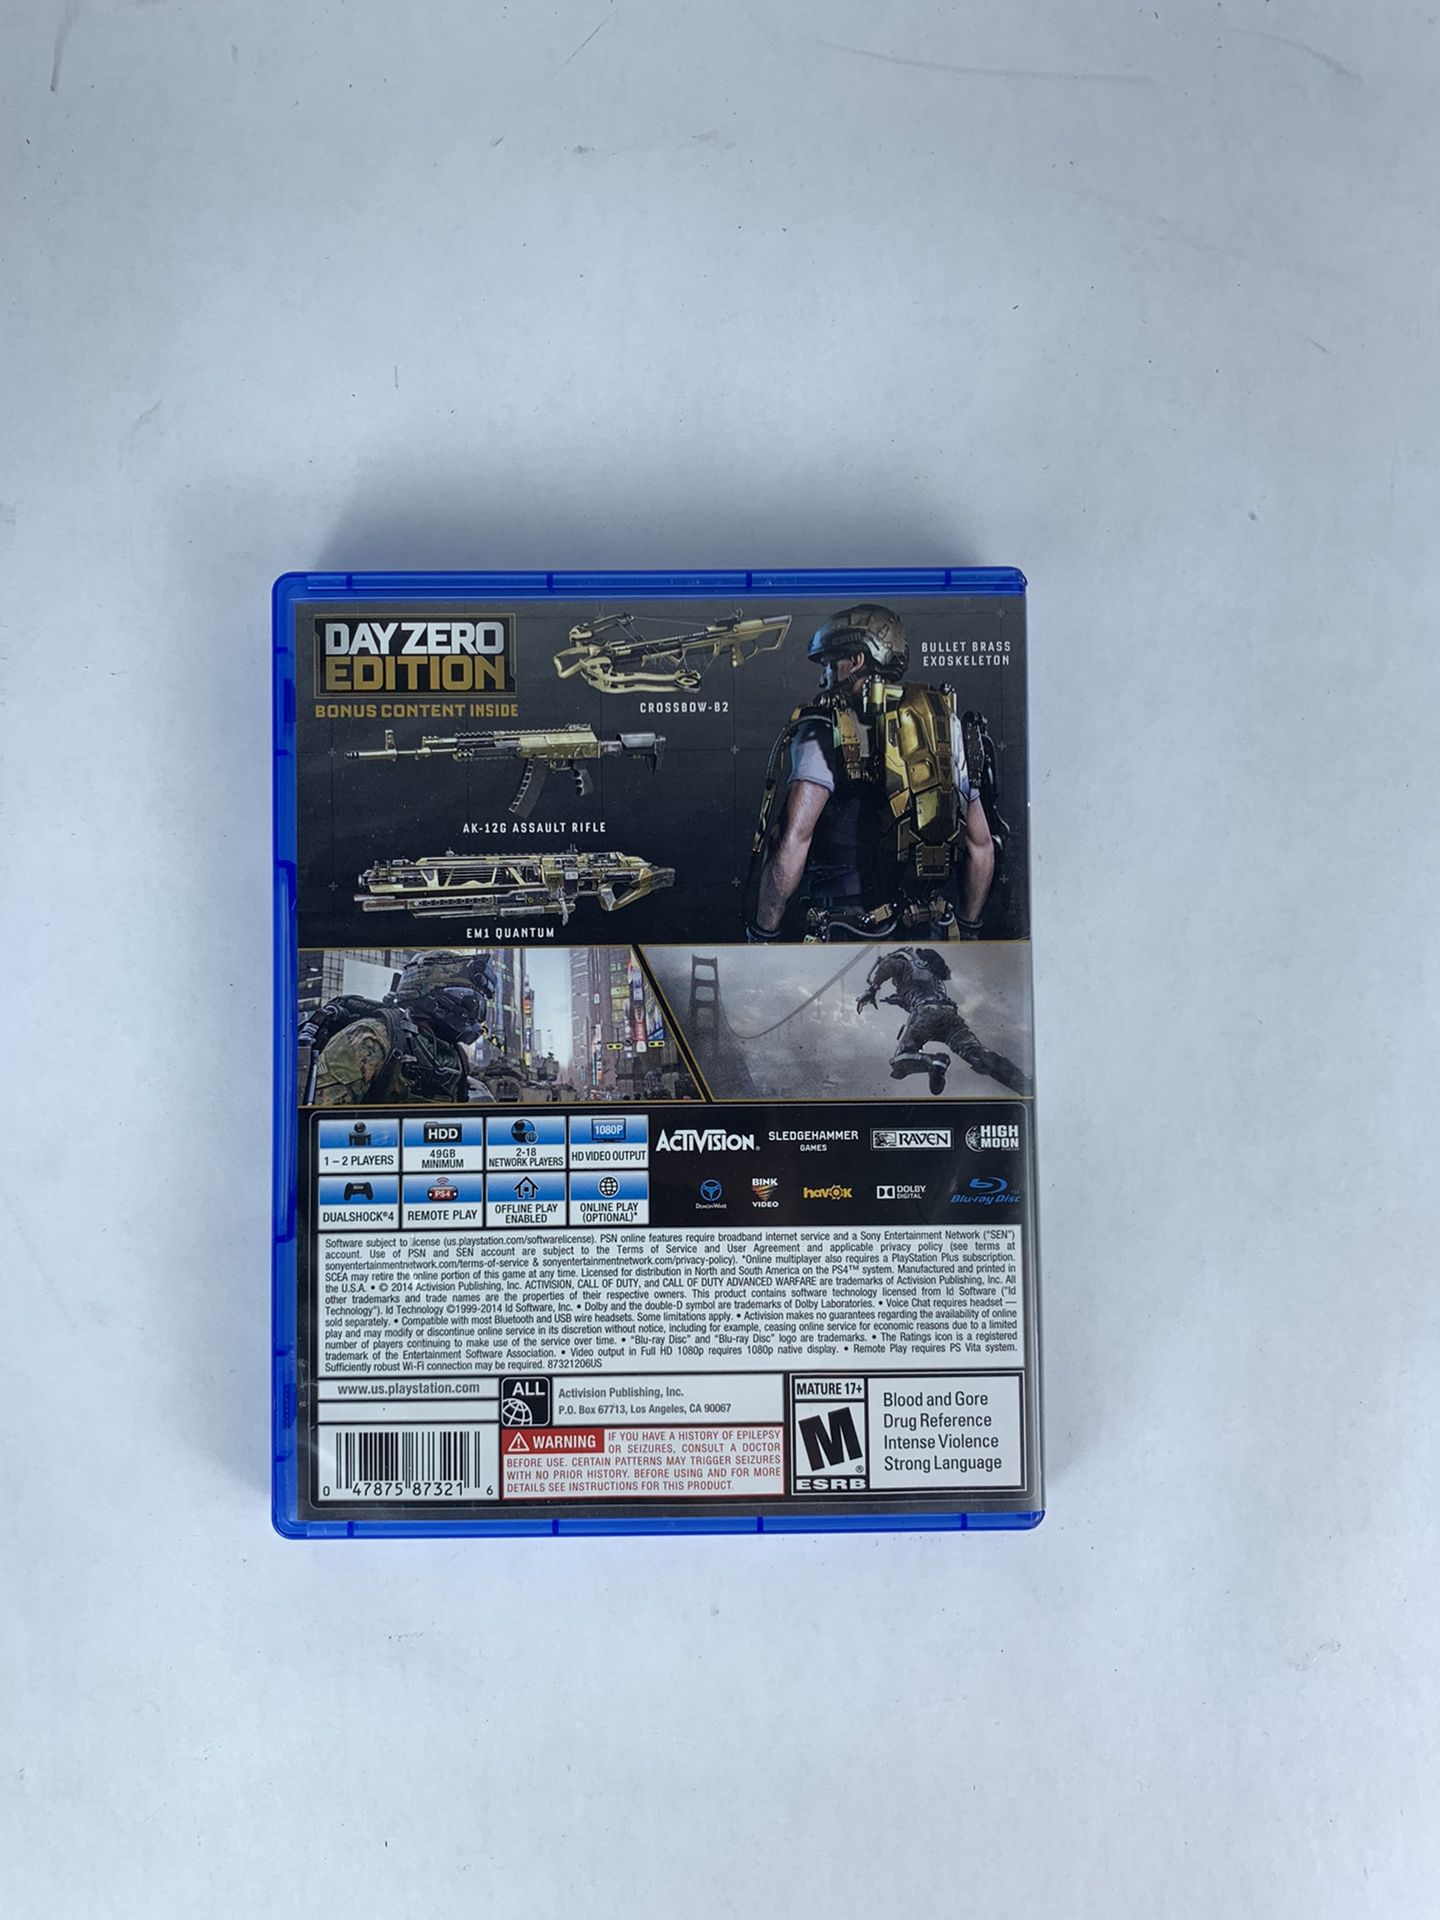 Xbox Game Consola Cod Of Duty Advanced Warfare Day Zero Addition for Sale  in Kent, WA - OfferUp